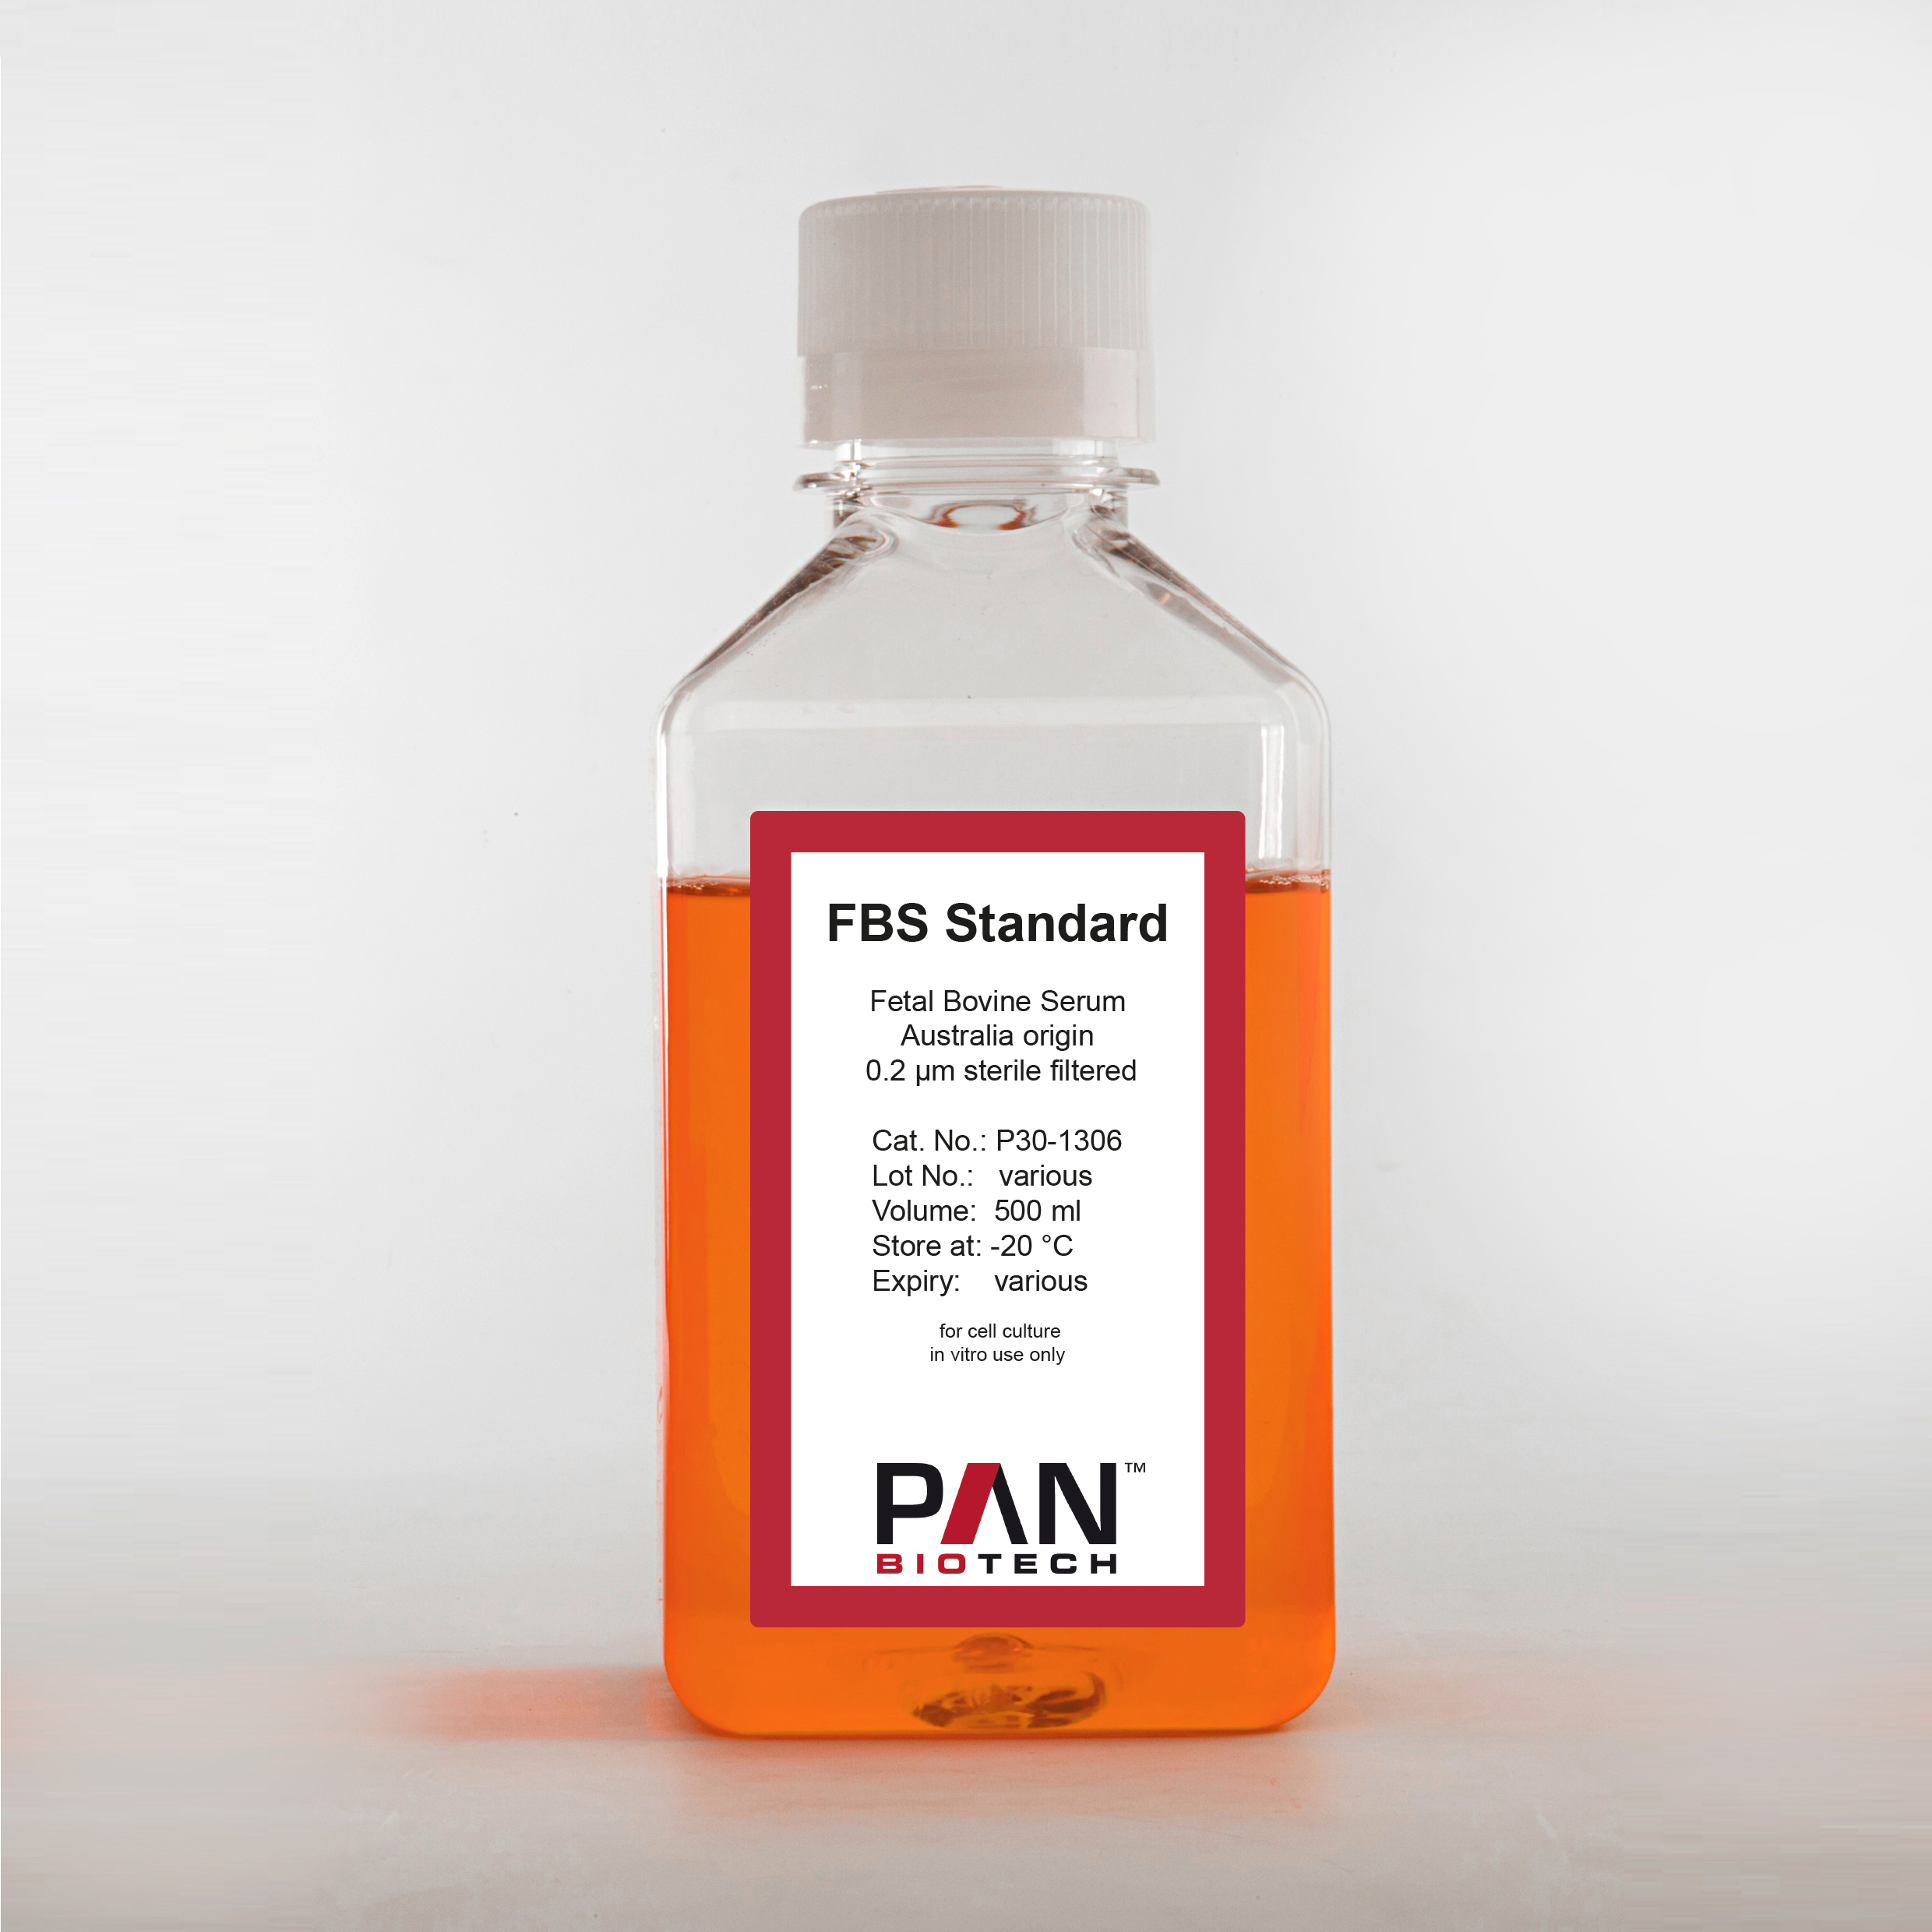 FBS Standard, Australia origin, fetal bovine serum, 0.2 µm sterile filtered